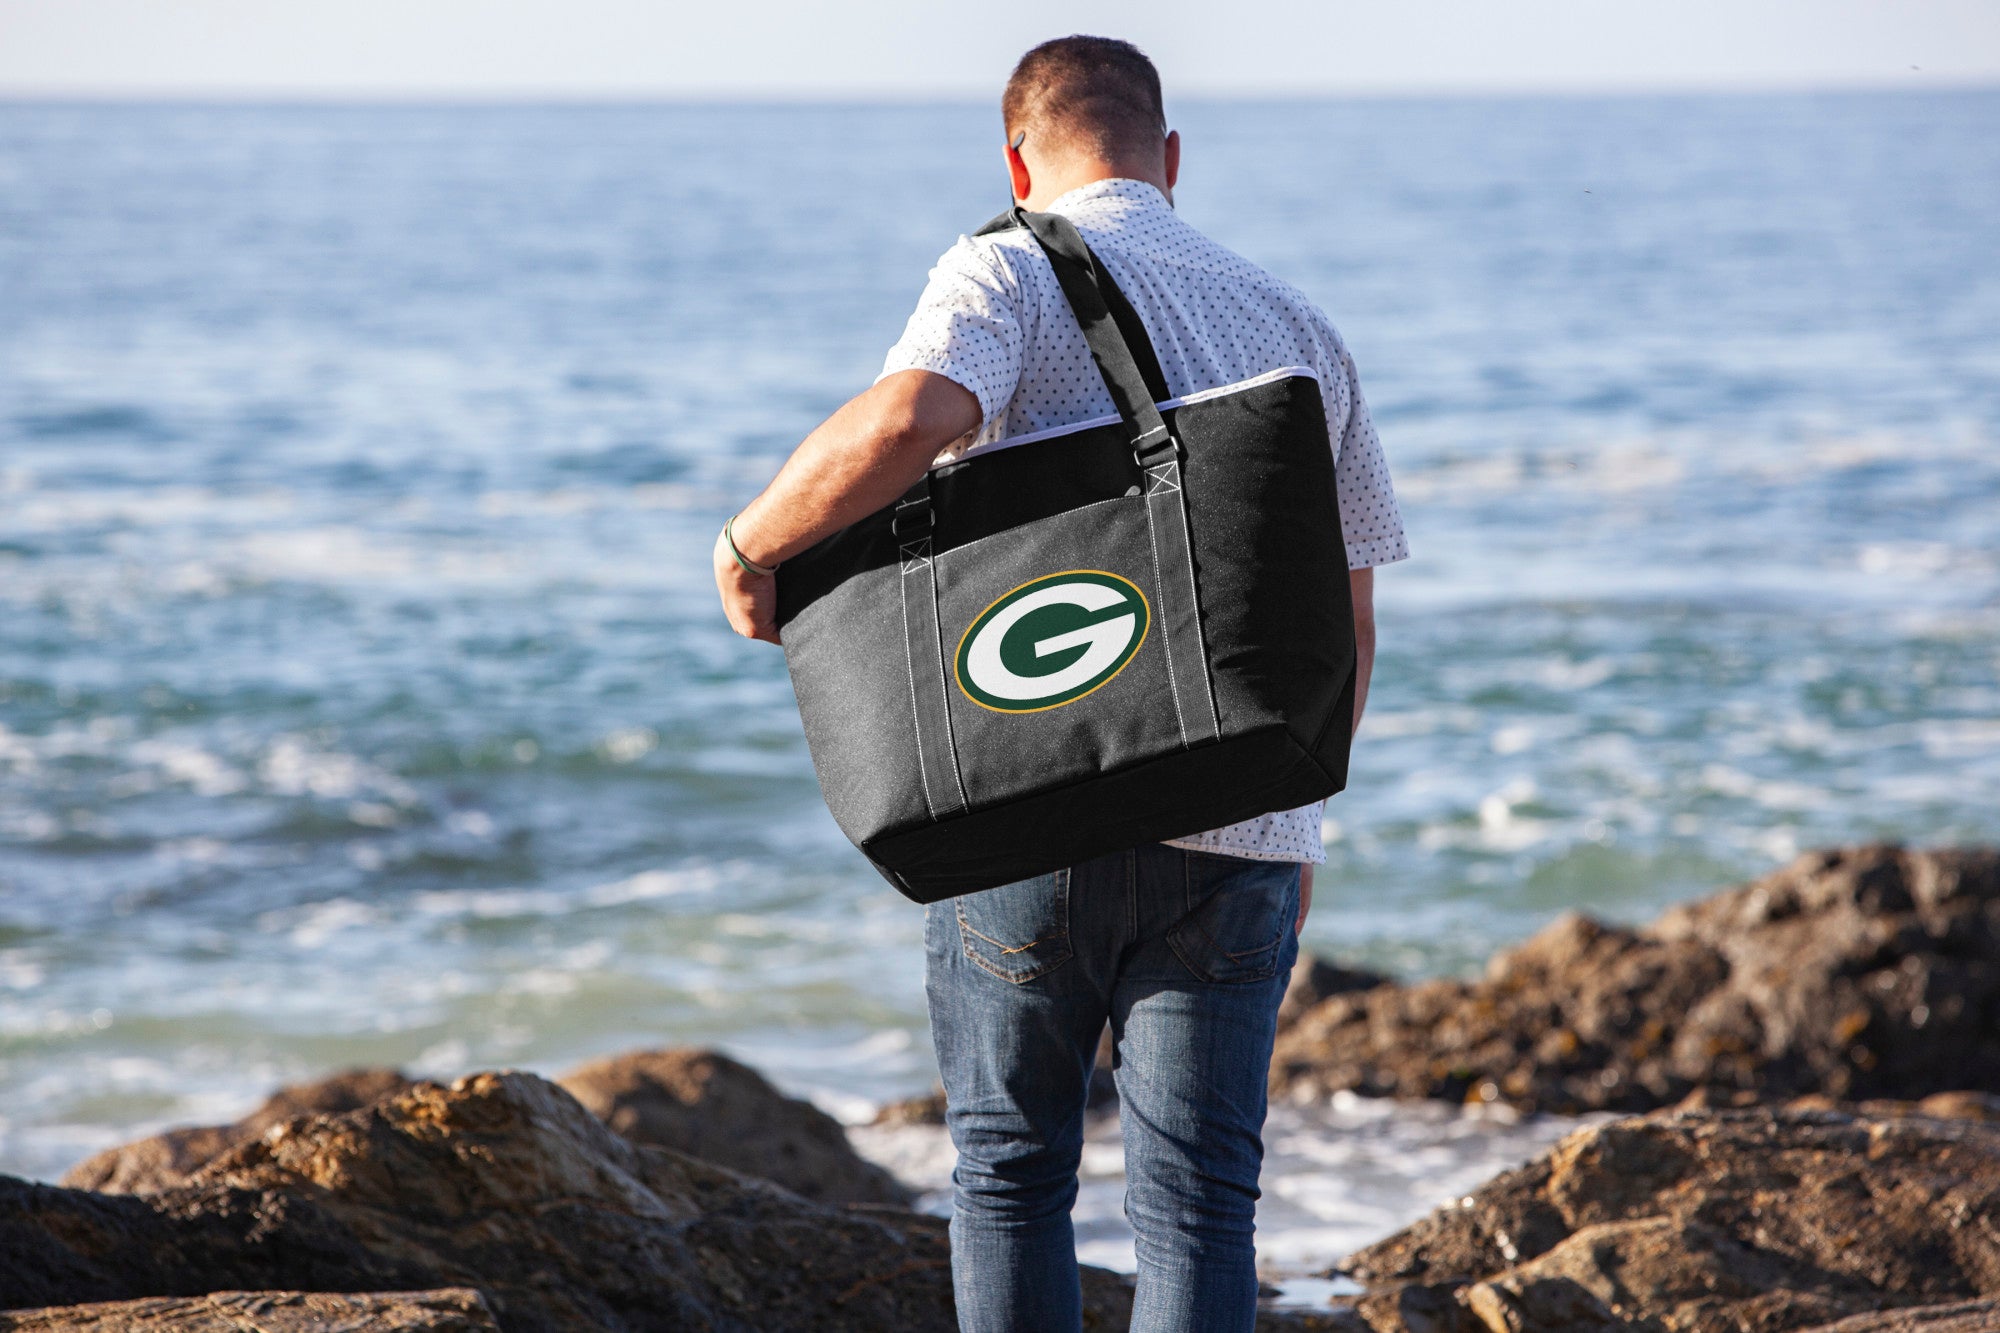 Green Bay Packers - Tahoe XL Cooler Tote Bag